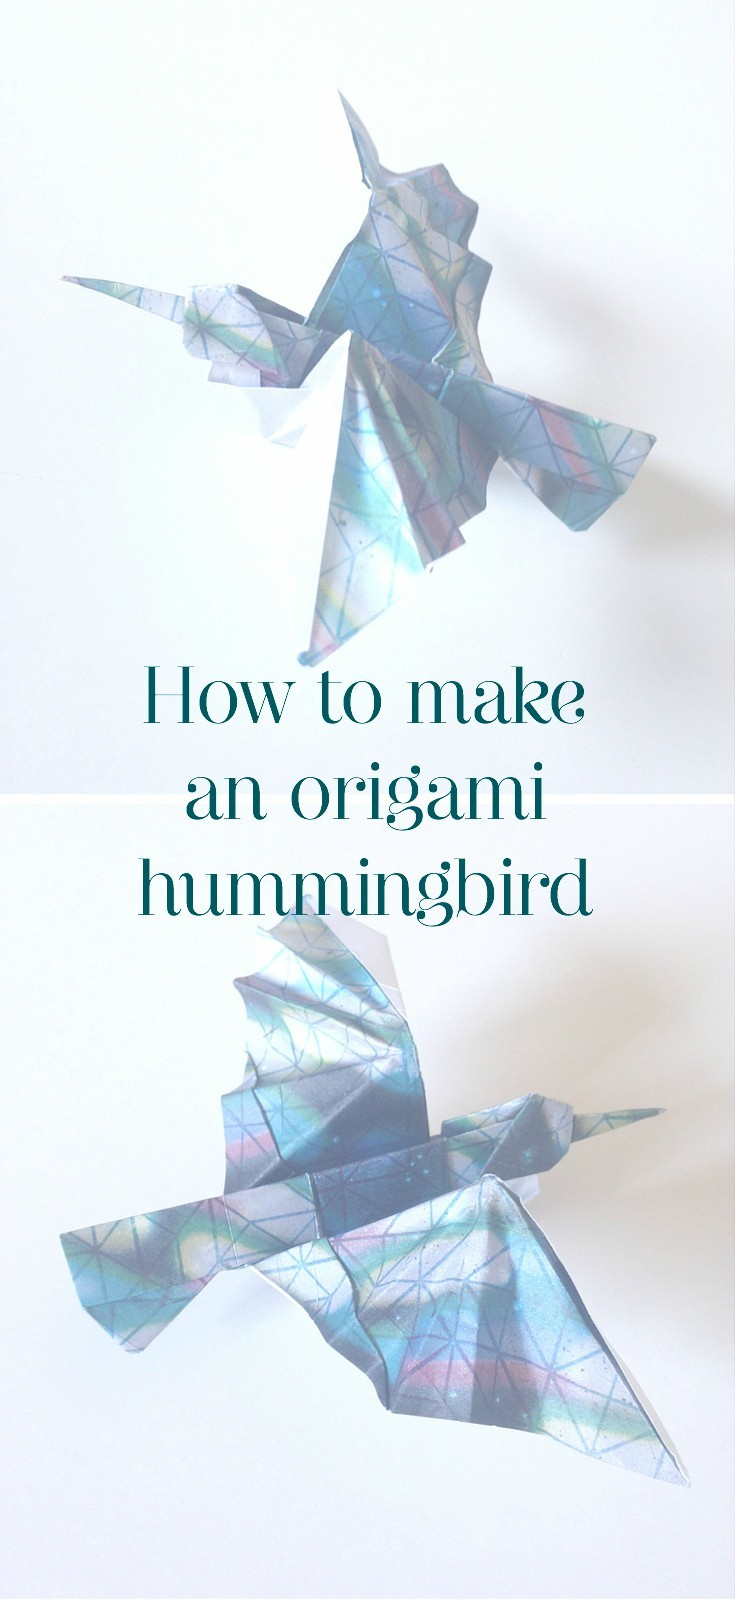 Origami Hummingbird Tutorial How To Make An Origami Hummingbird The Paperdashery